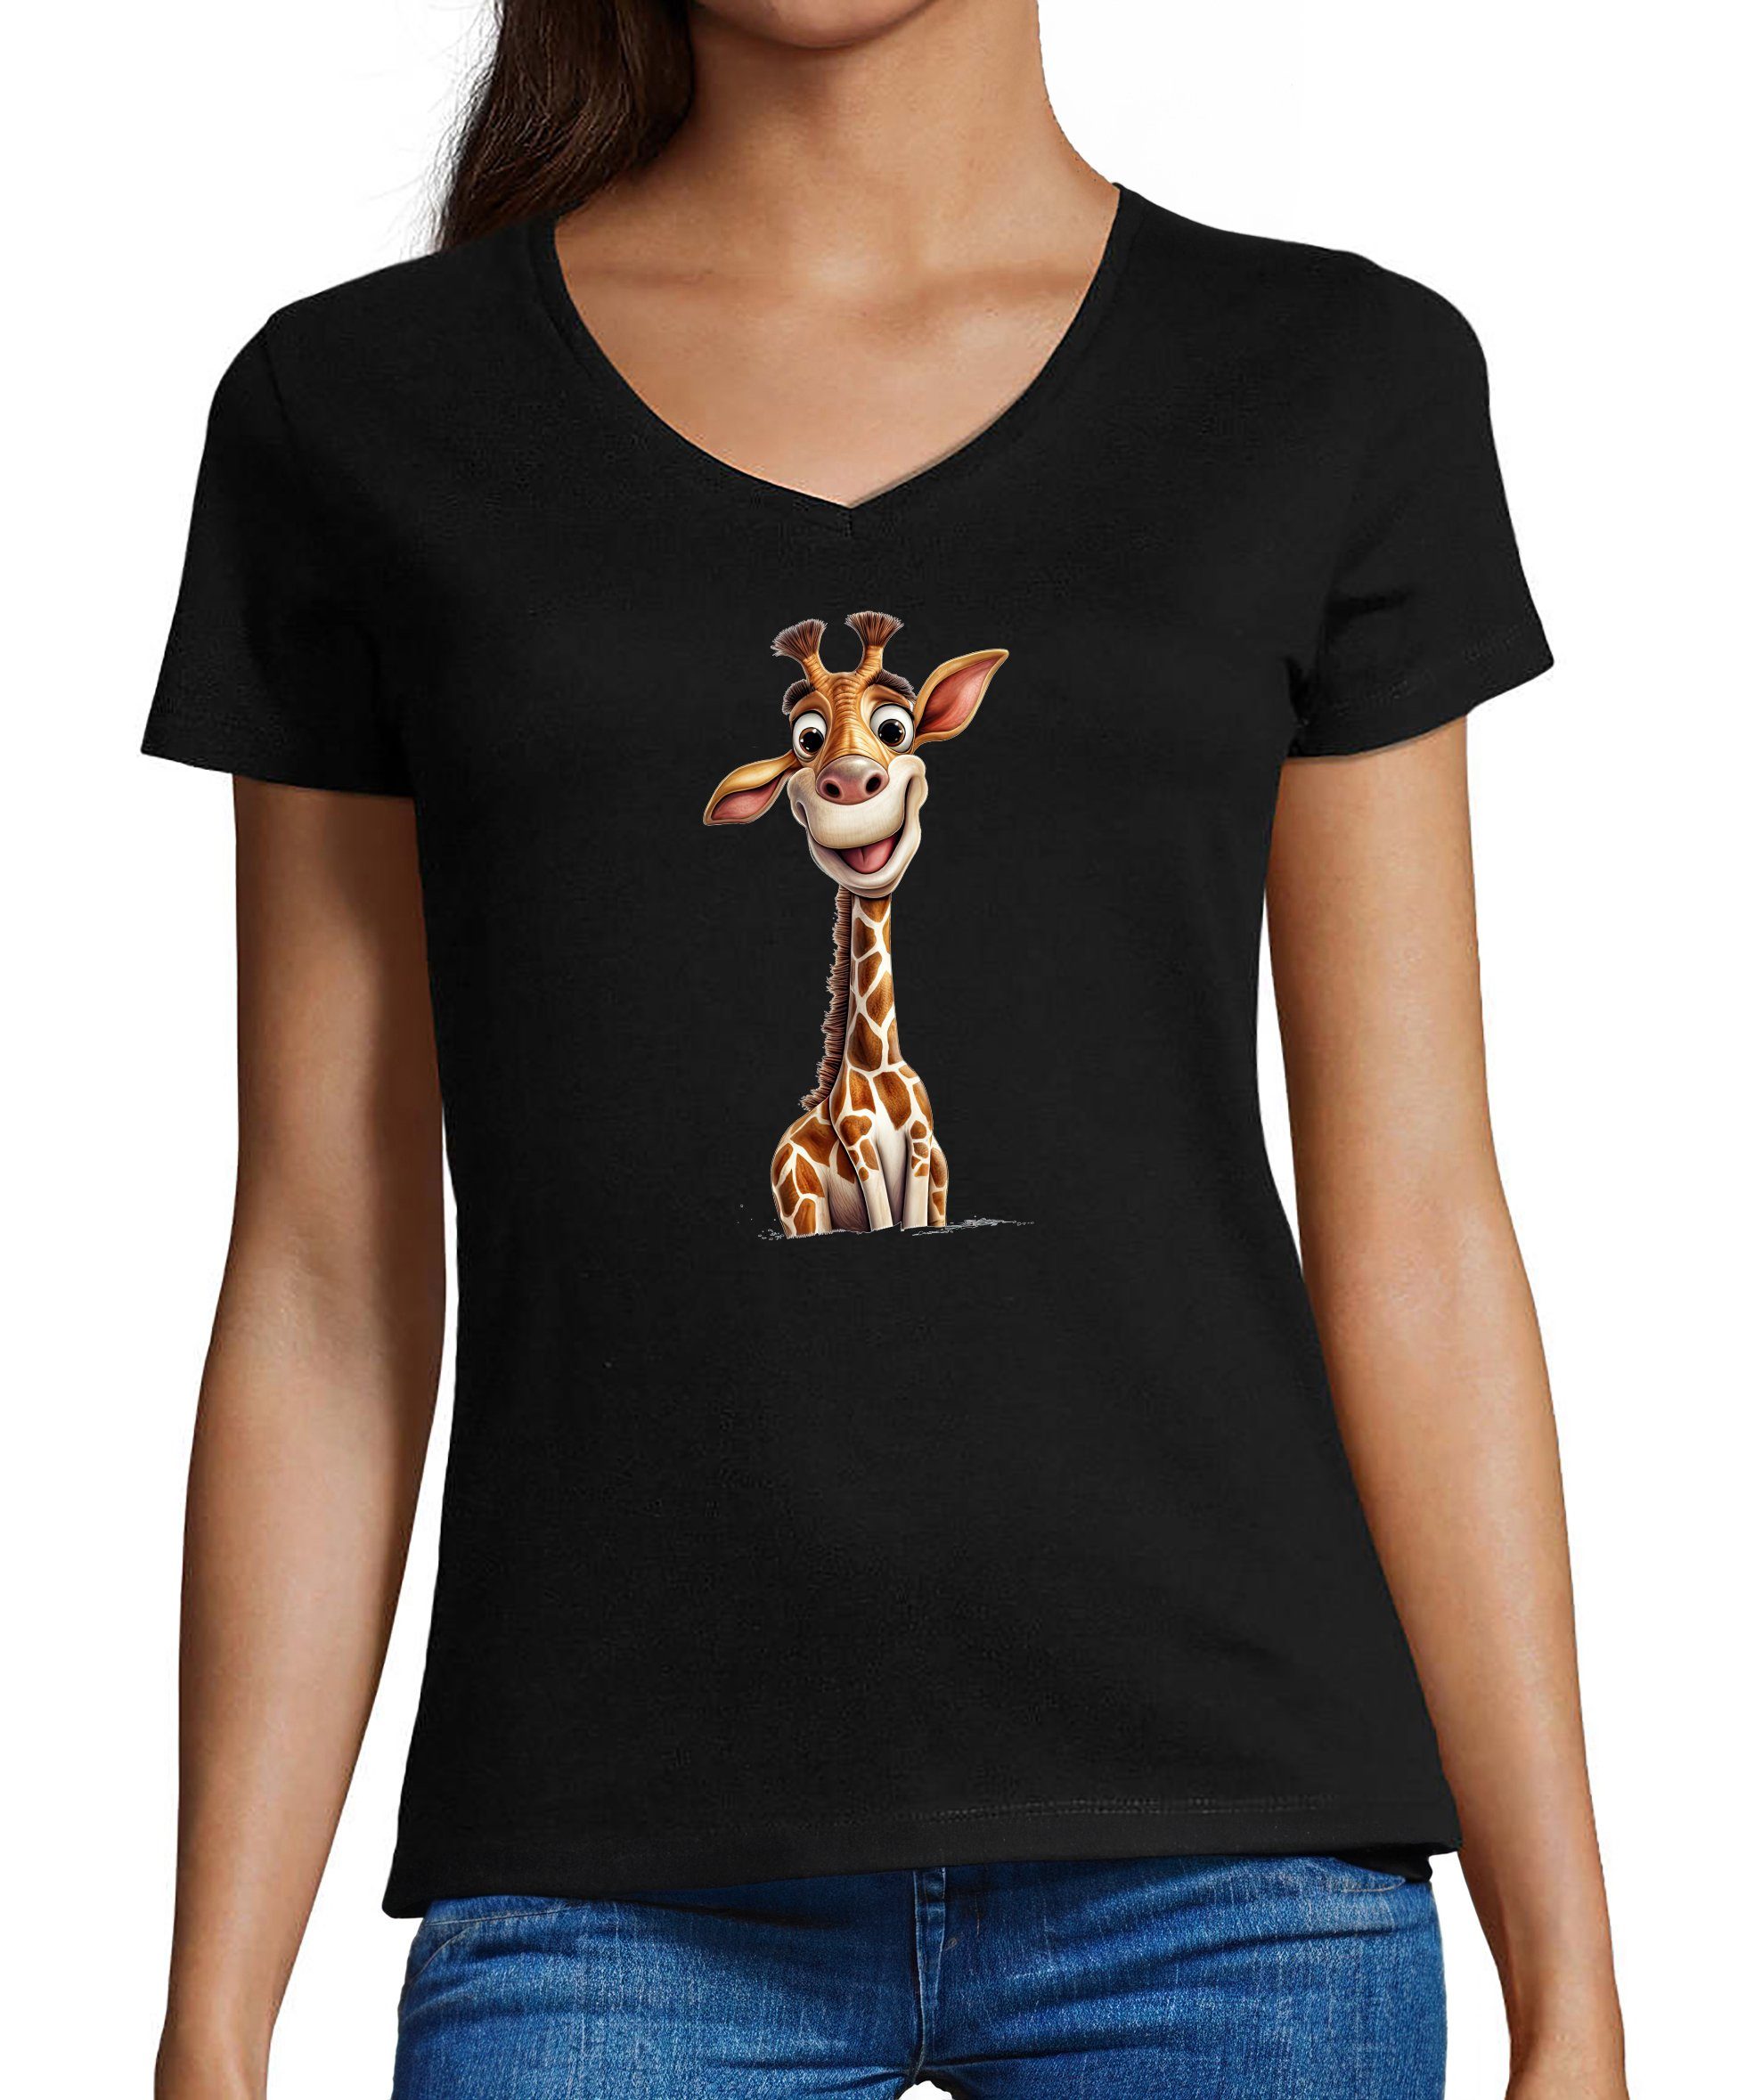 MyDesign24 T-Shirt Damen Wildtier Print Shirt - Baby Giraffe V-Ausschnitt Baumwollshirt mit Aufdruck Slim Fit, i273 schwarz